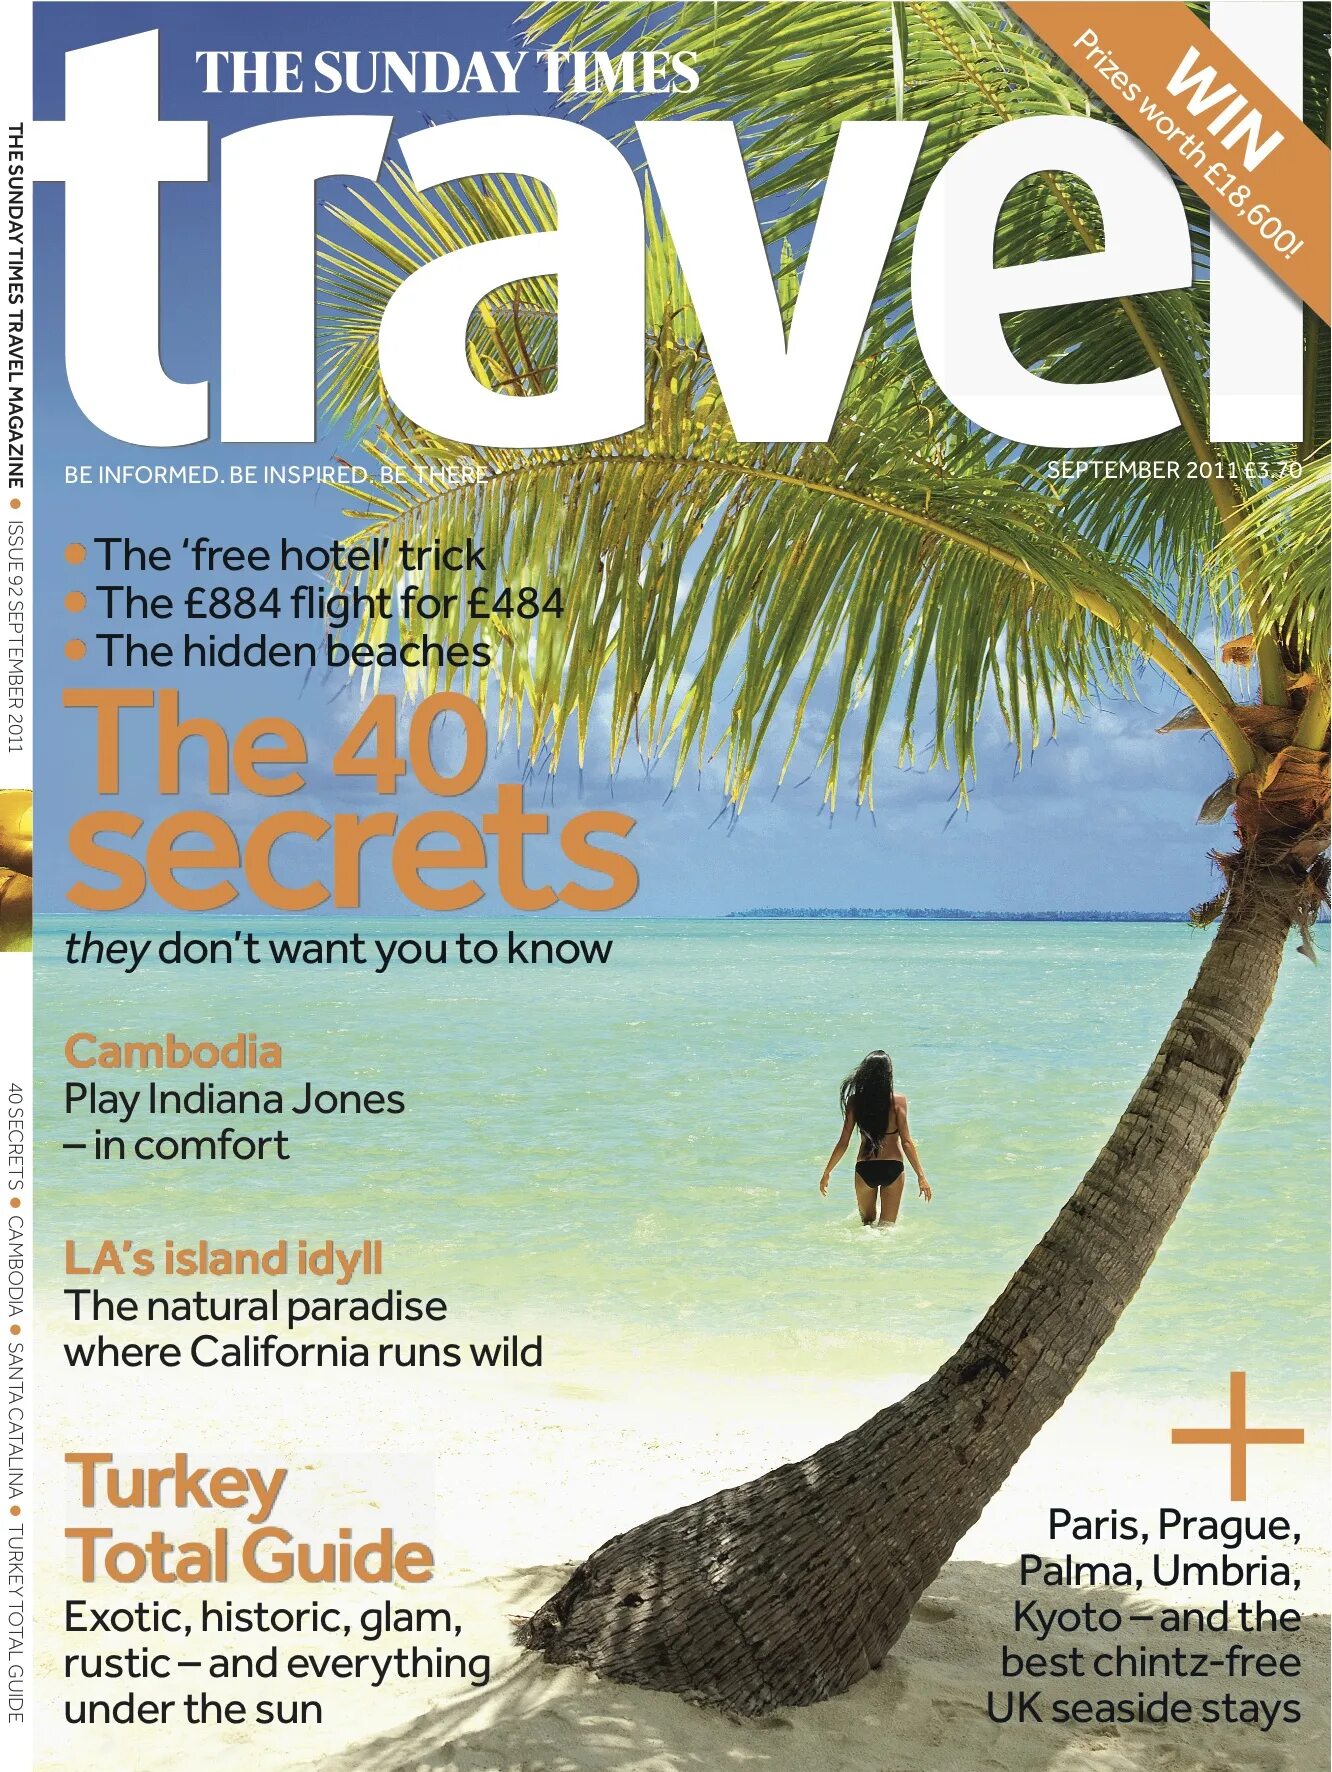 Журнал о путешествиях. Travel журналы. Travel Magazine обложка. Журнал туризм. Www magazines